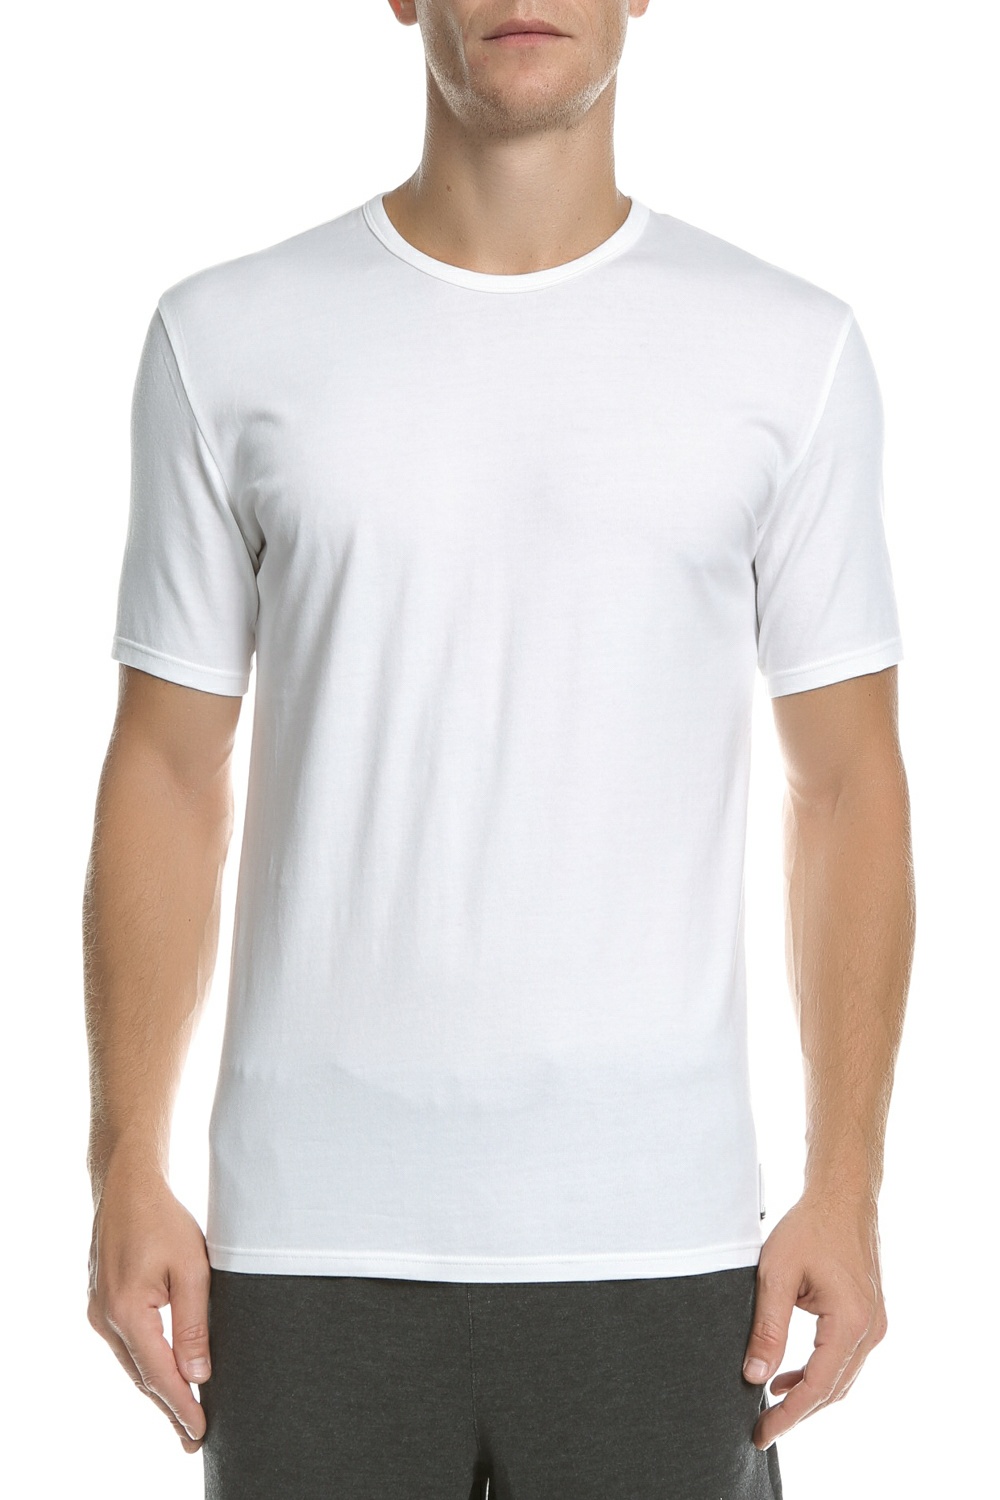 CK UNDERWEAR – Ανδρικό T-shirt CK UNDERWEAR λευκό 1521814.0-0091